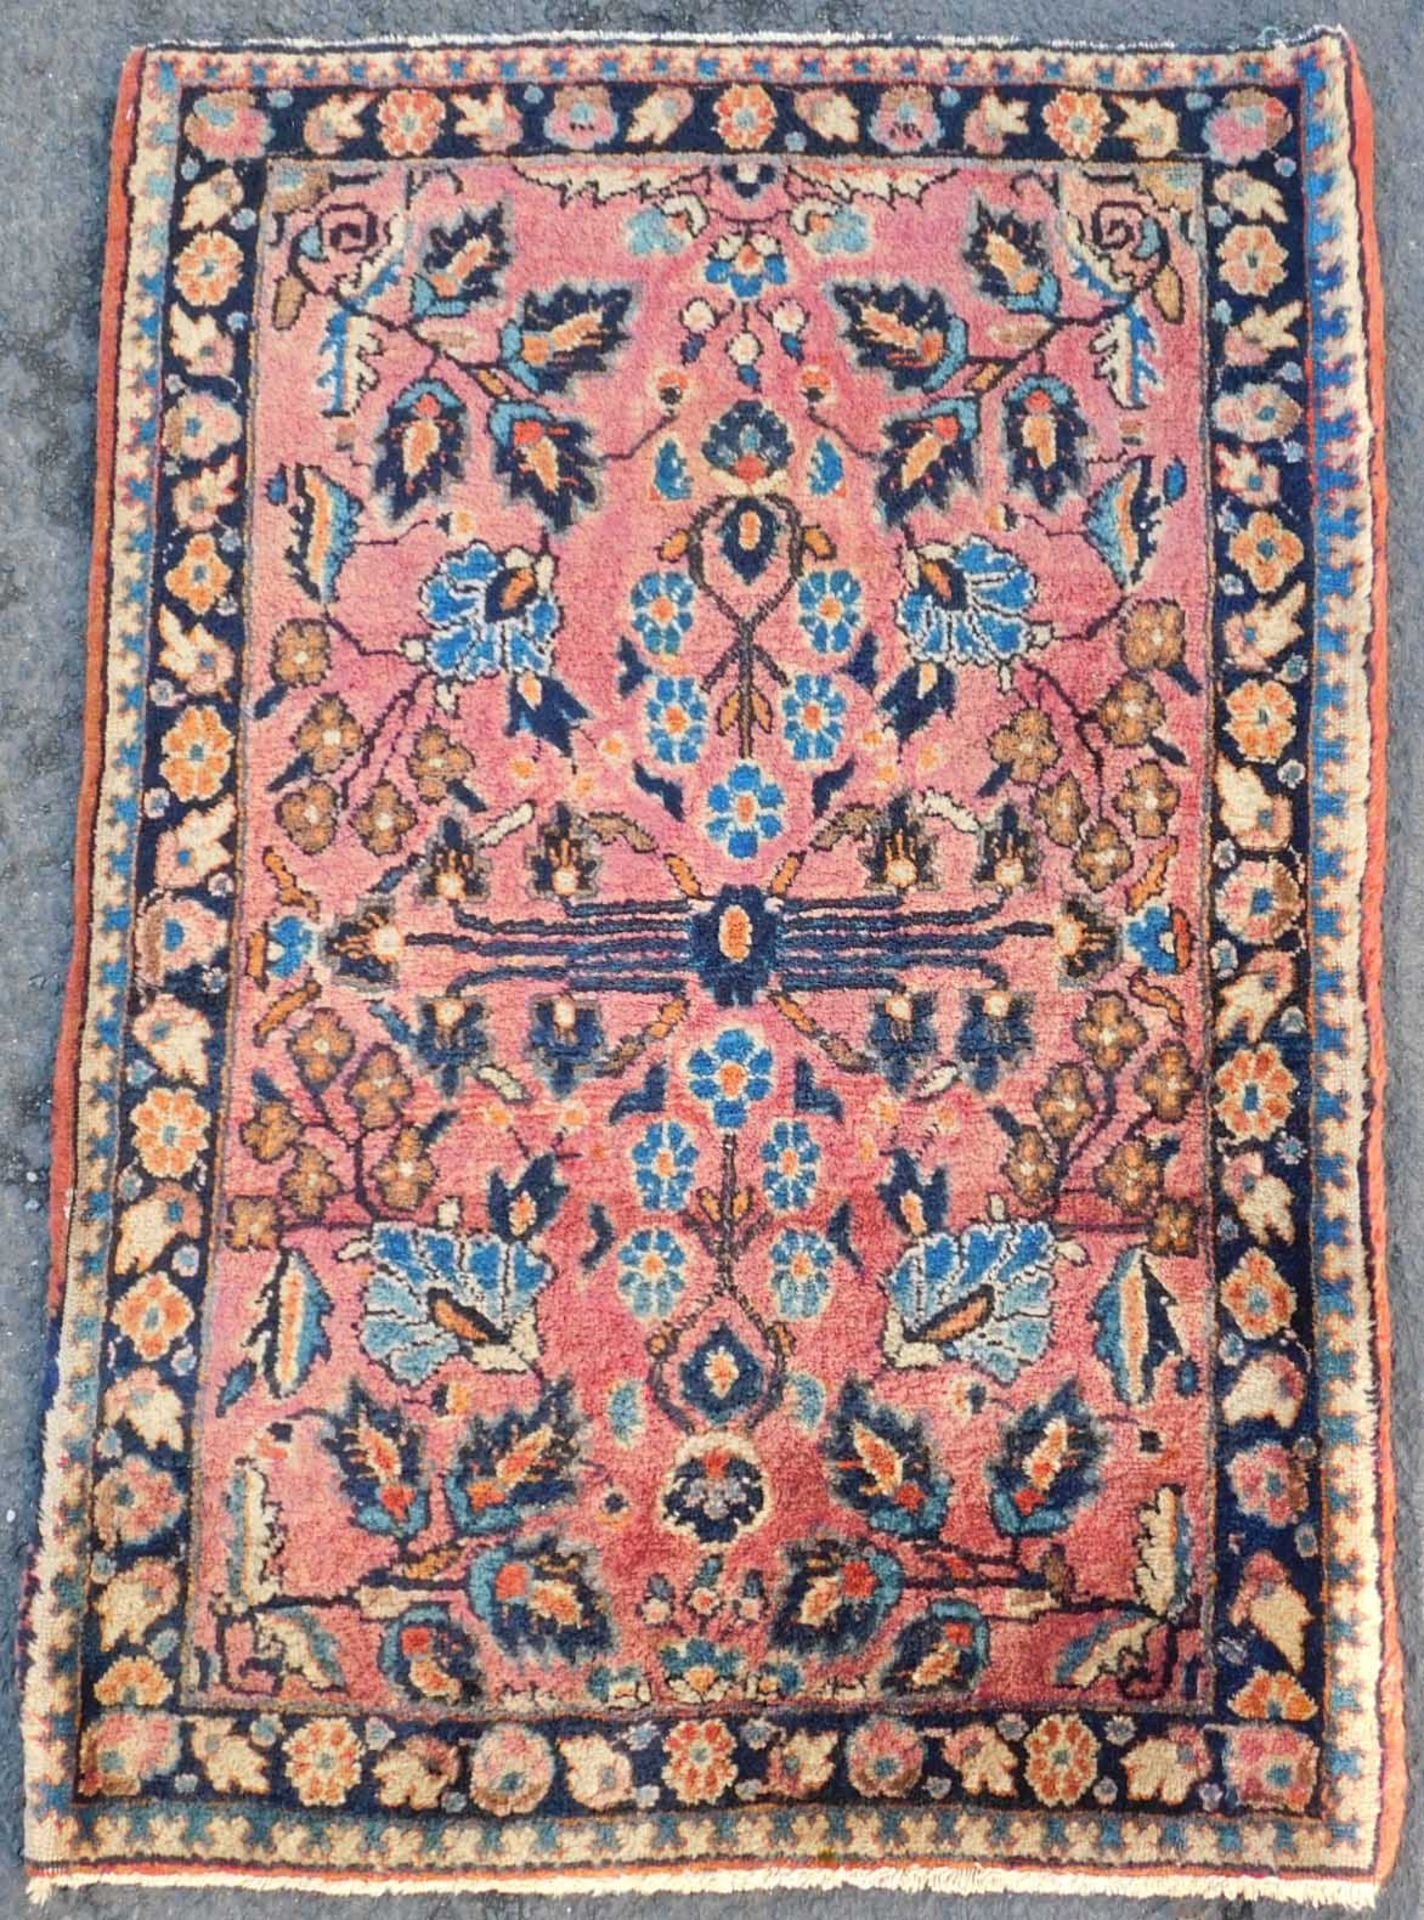 2 Saruk "American Saruk". Persian carpets. Iran, about 80 - 110 years old. - Image 11 of 12